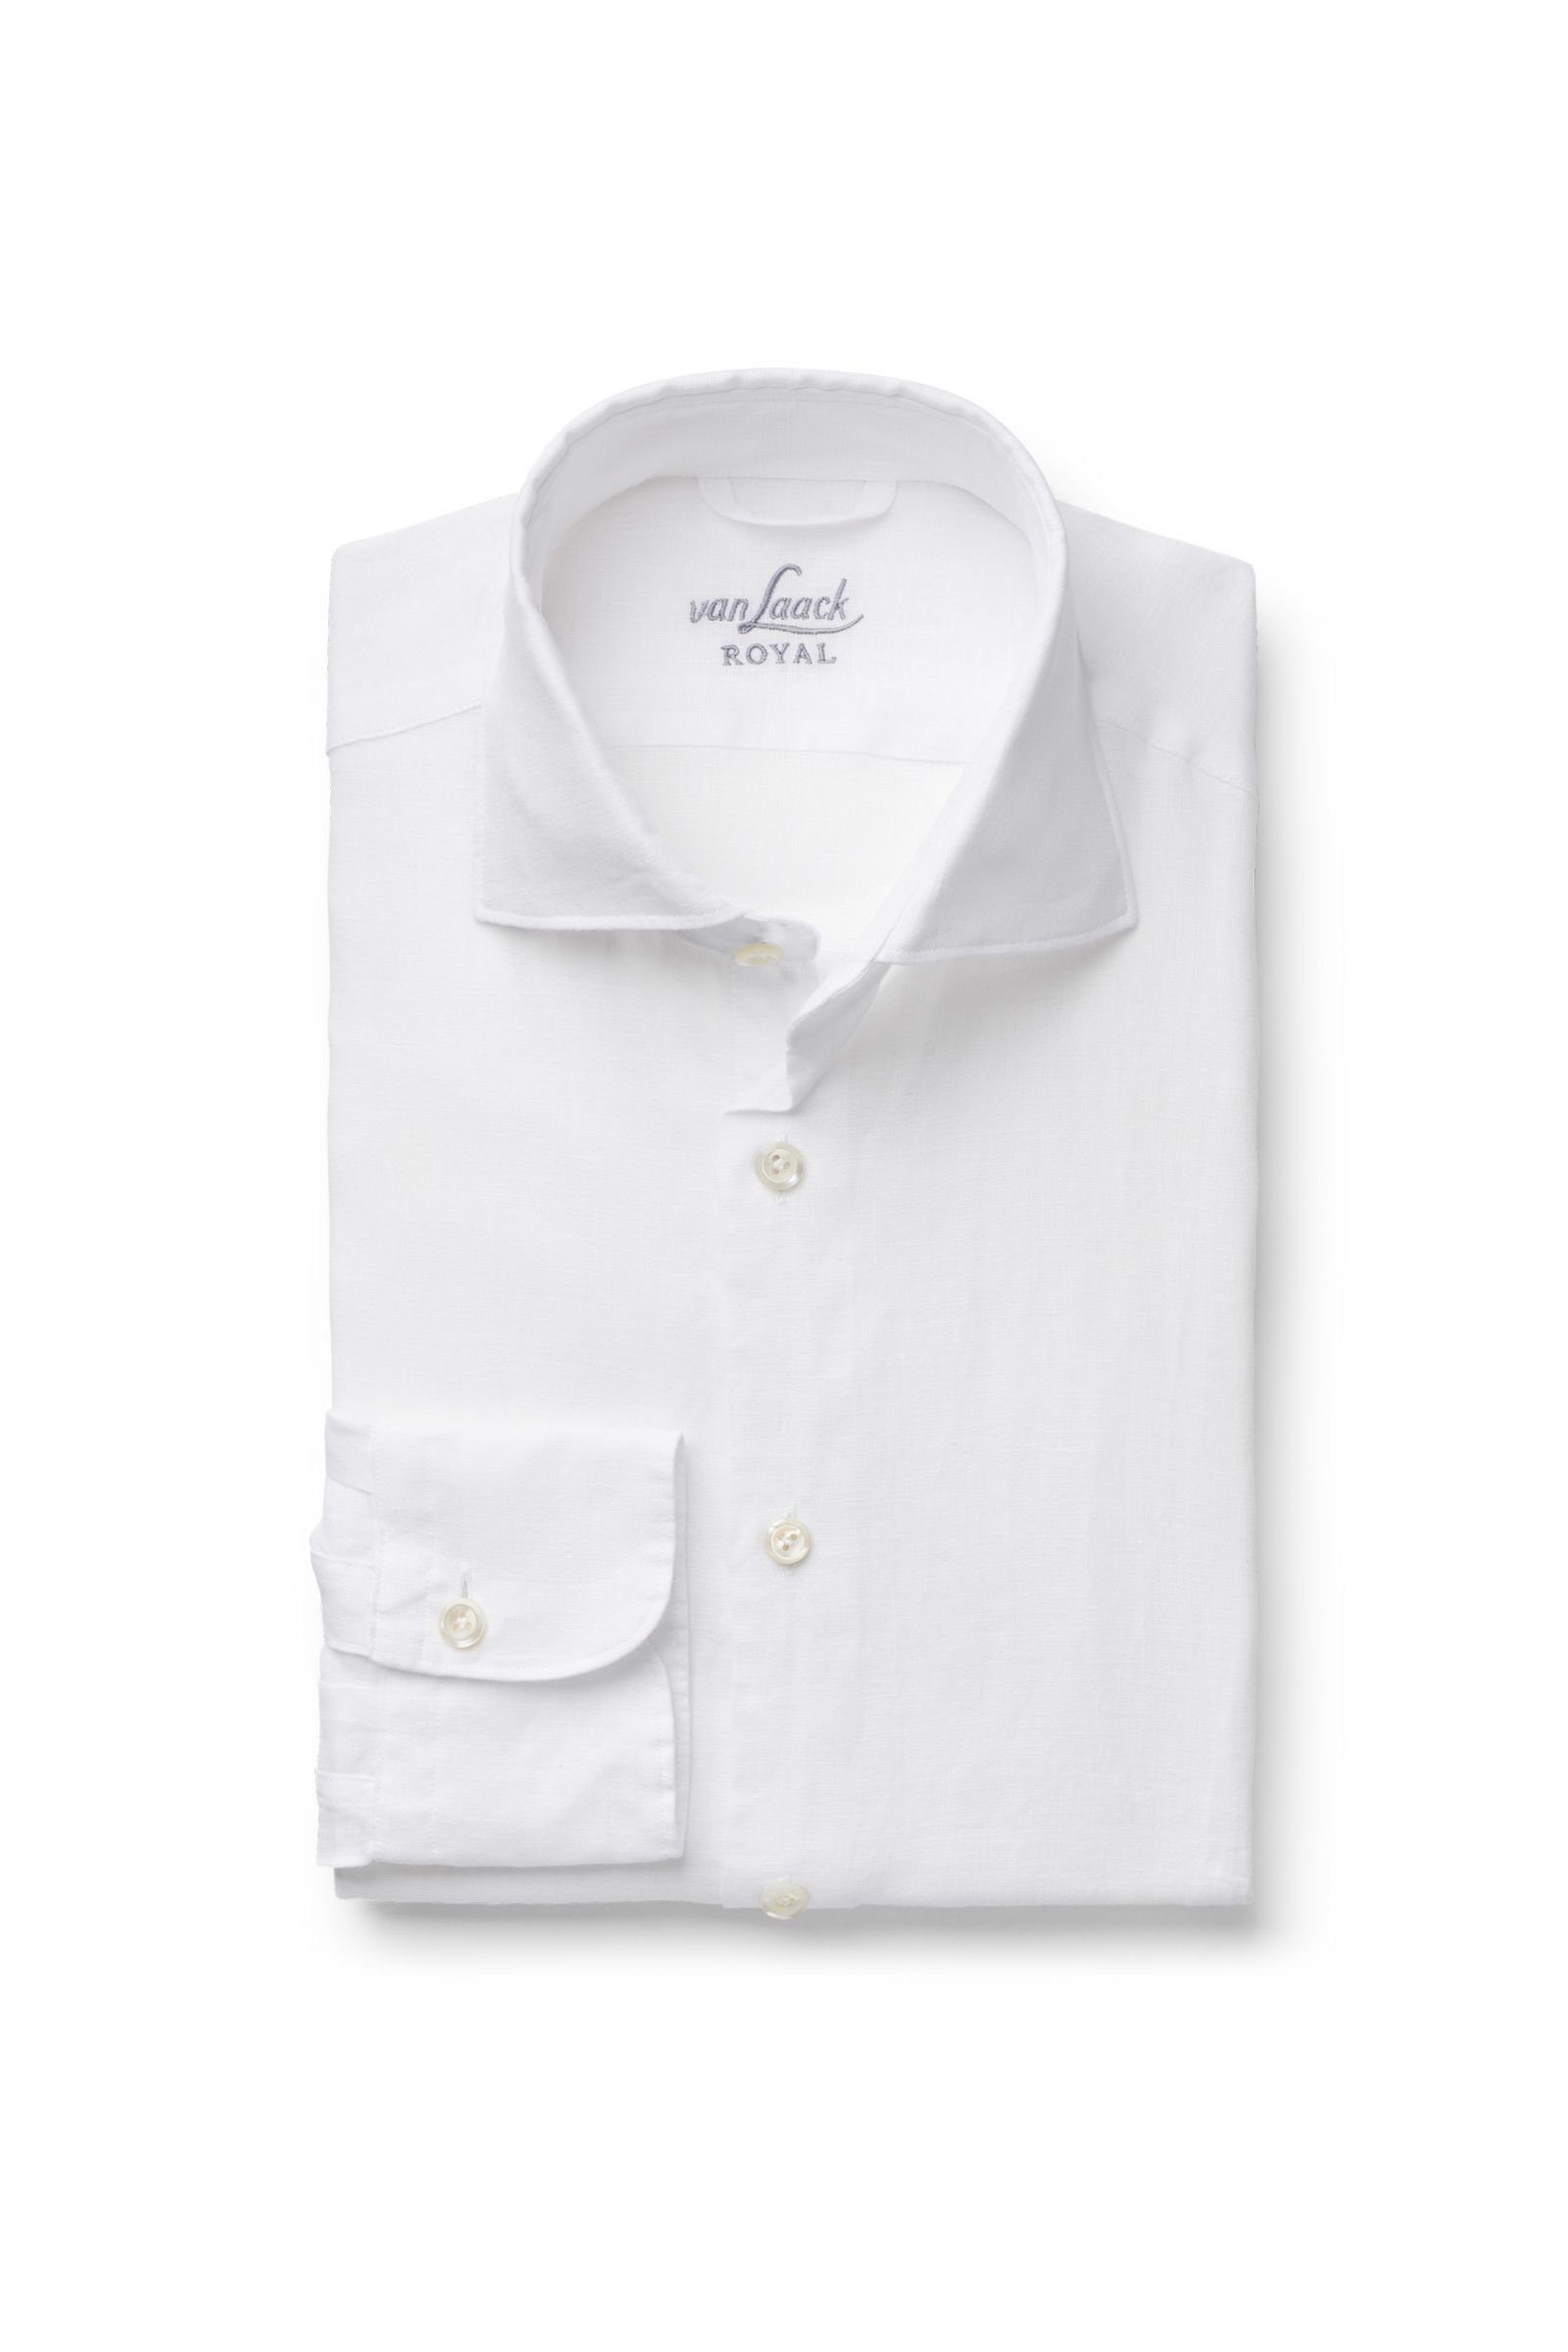 Linen shirt 'Livara Tailor Fit' shark collar white